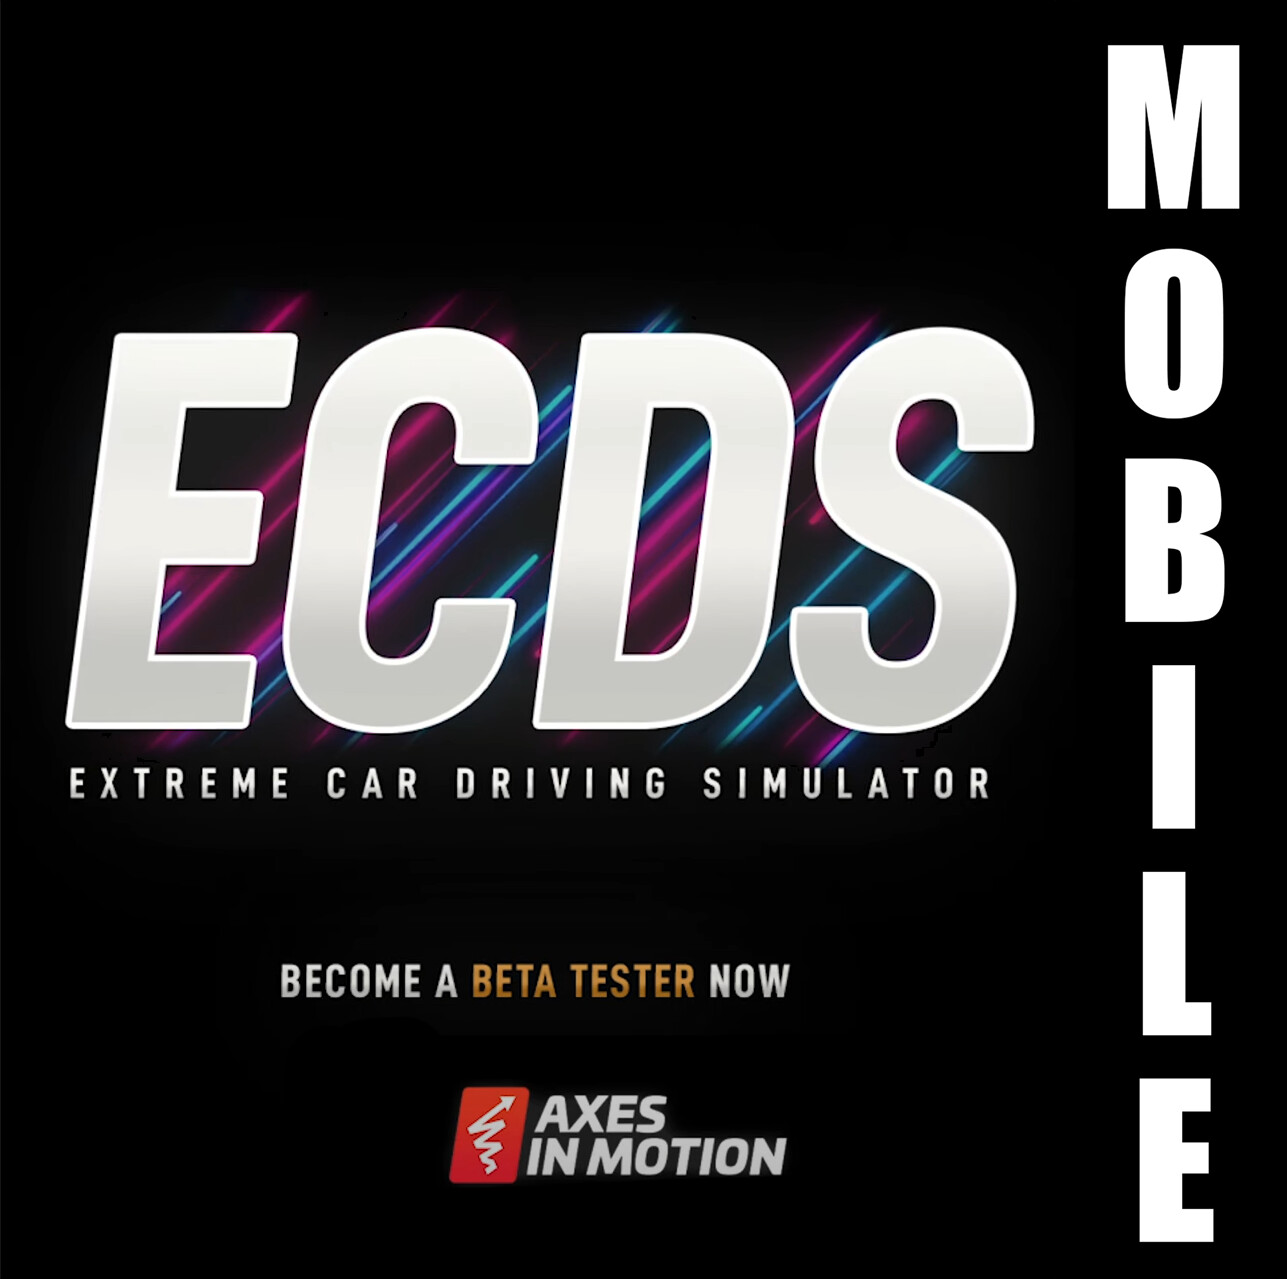 Extreme Car Driving Simulator a Furious Racing Game · Creative Fabrica